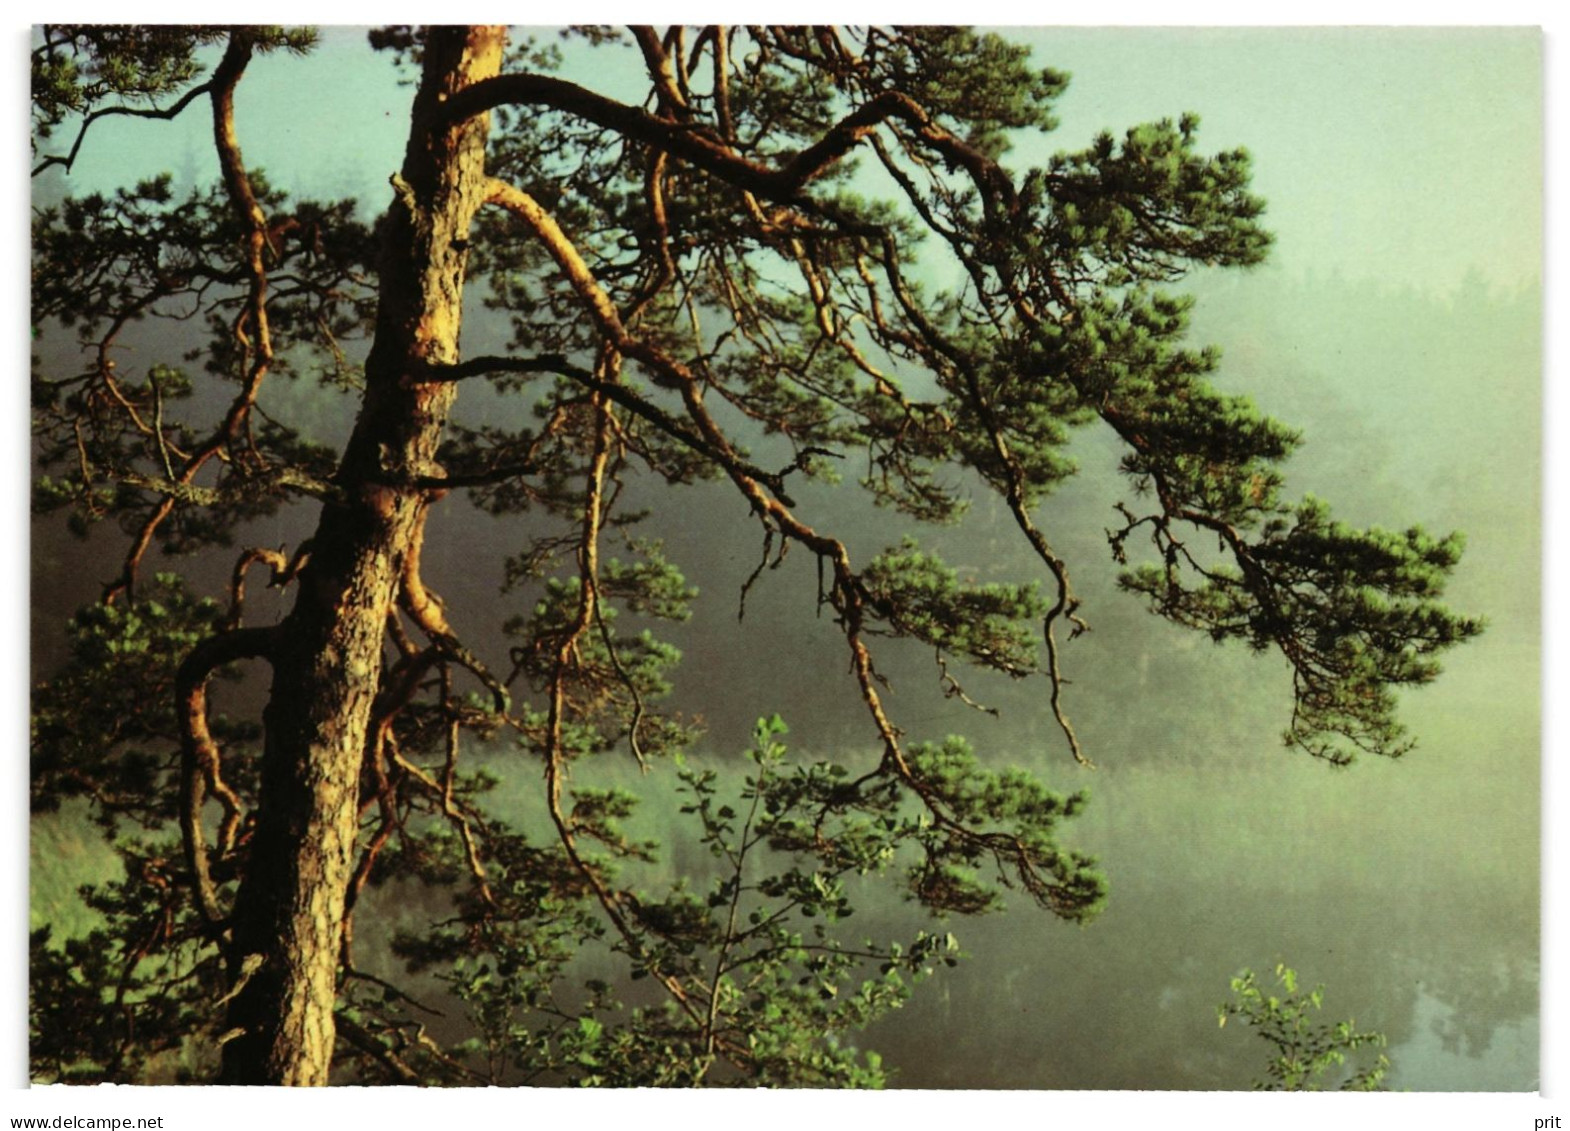 Pine Tree, Finland Finnish WWF Unused Postcard 1980s Publisher World Wide Fund For Nature, Serie Tunnelma 3, M.Rautkari - Rhinocéros